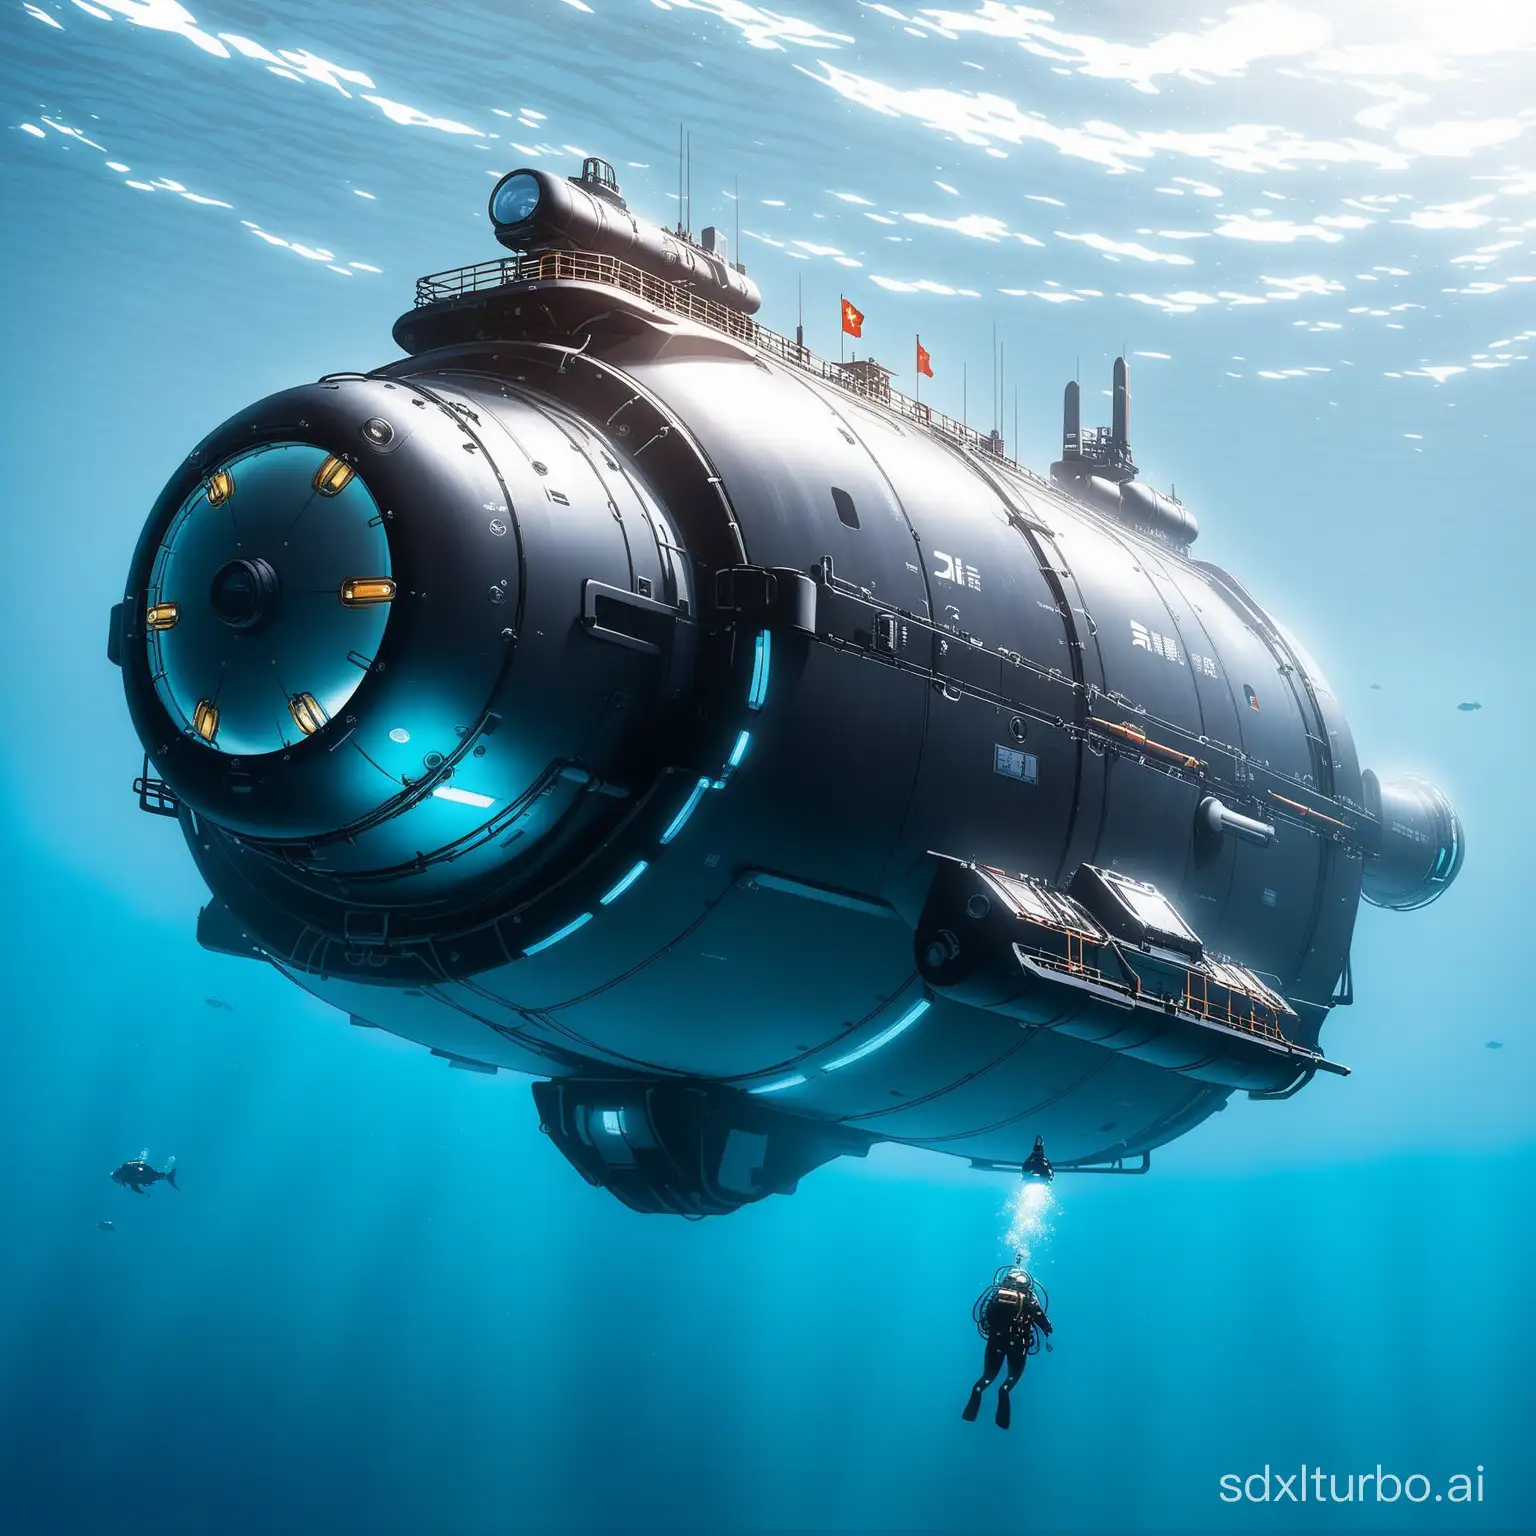 China's Jiaolong Submersible Science Fiction